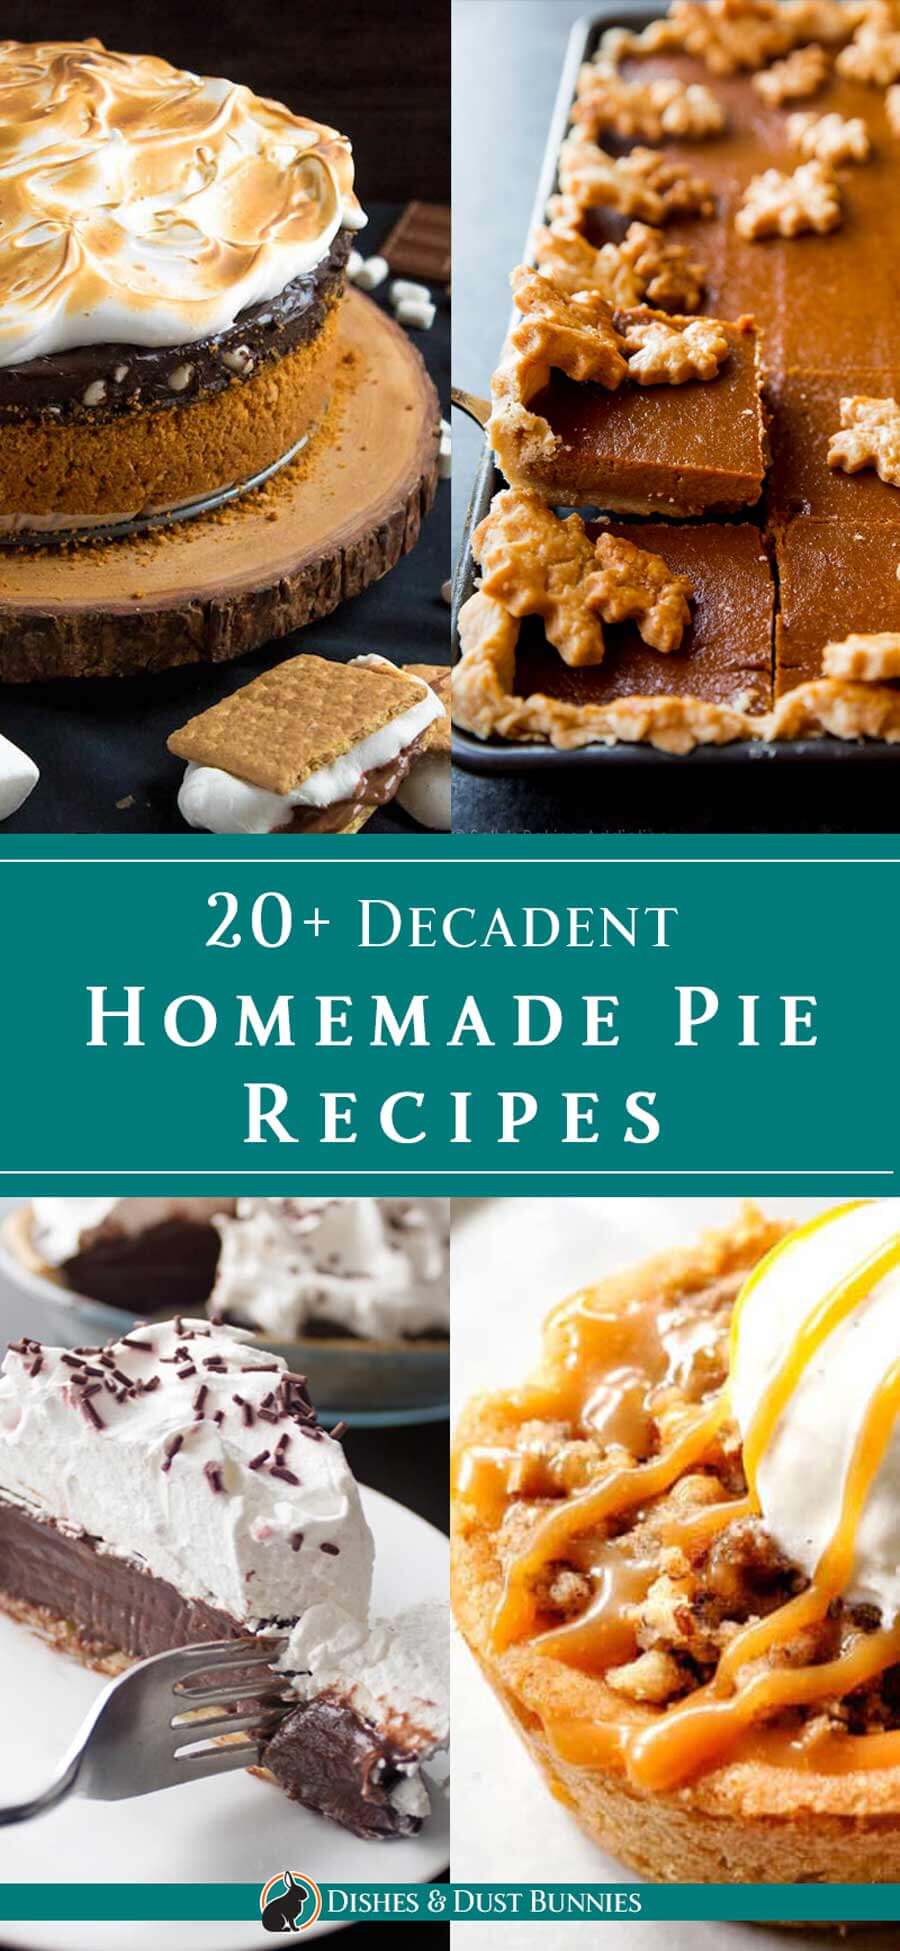 20+ Decadent Homemade Pie Recipes via @mvdustbunnies